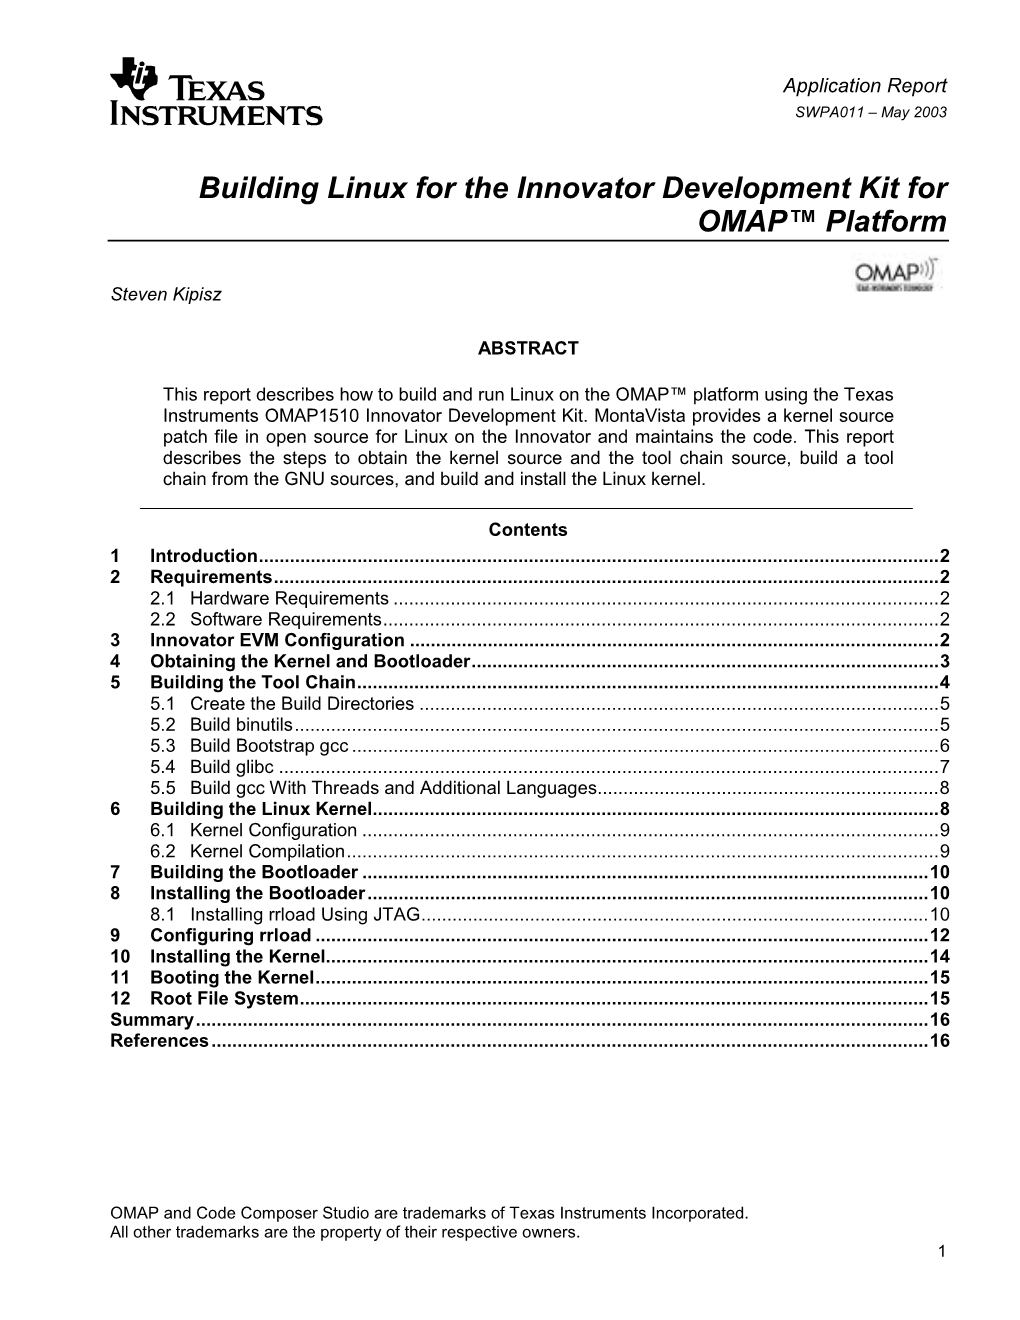 Building Linux for the Innovator Development Kit for Omapý Platform